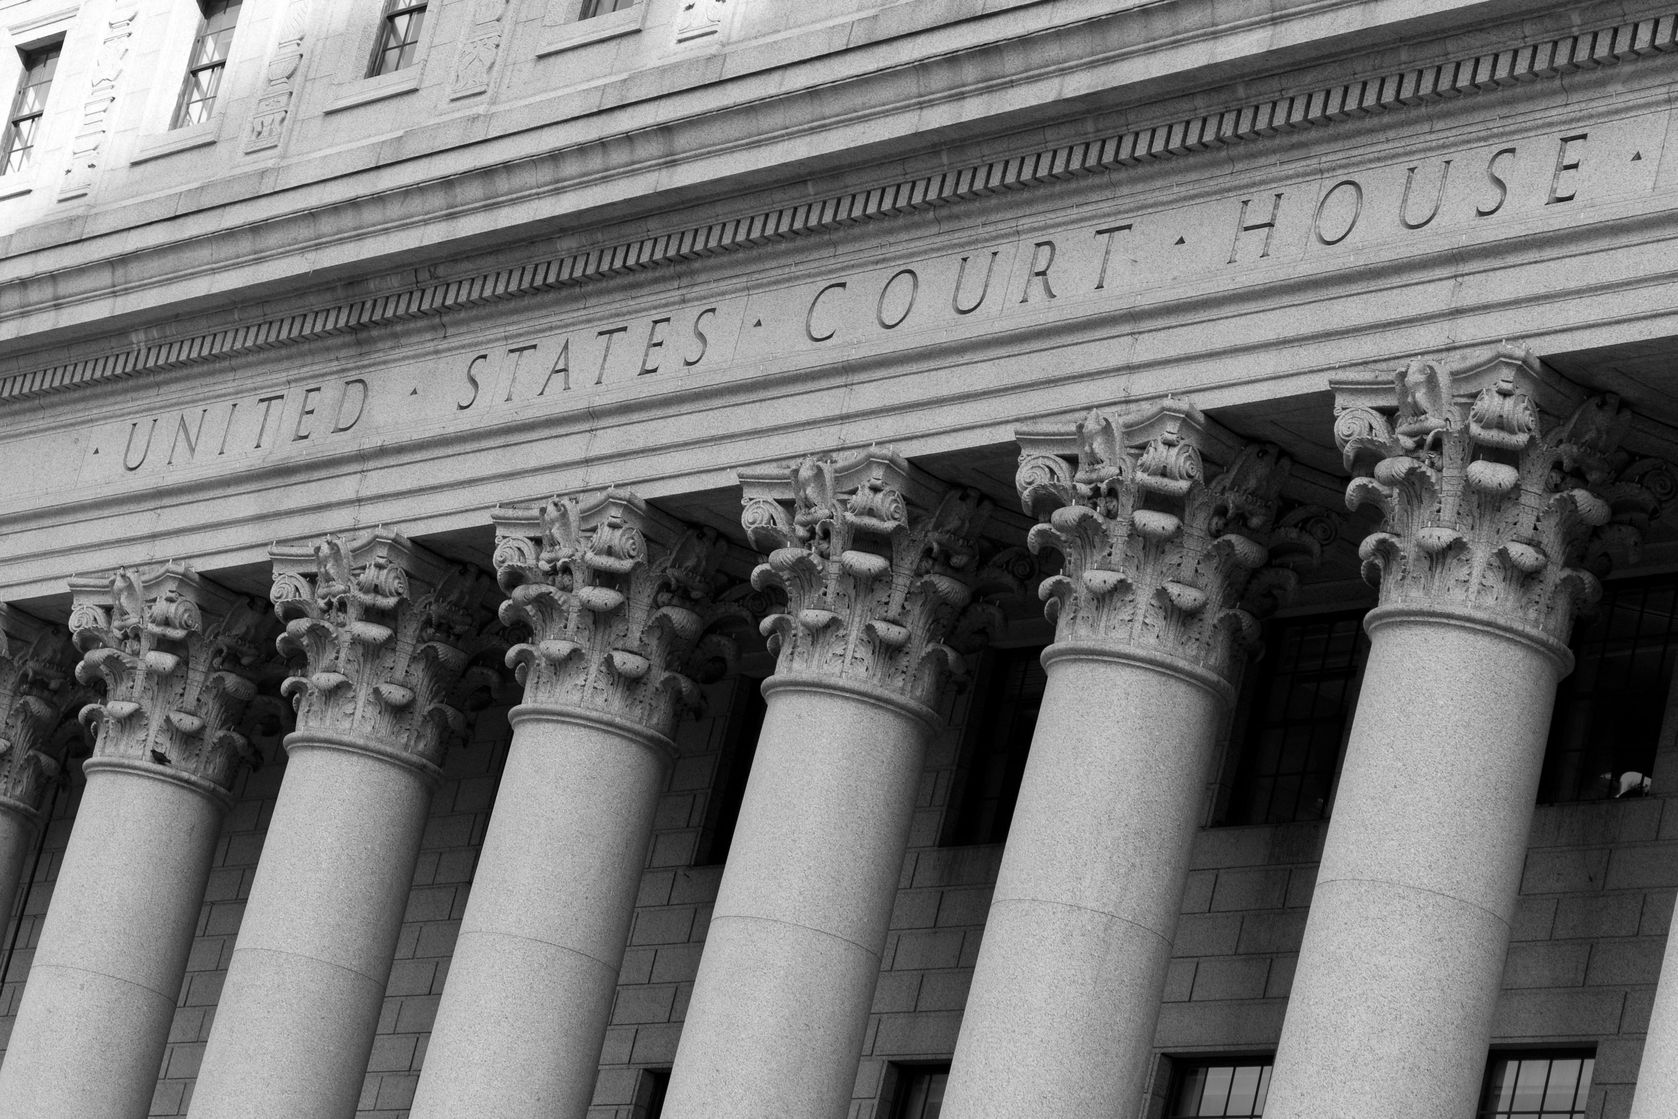 courthouse columns